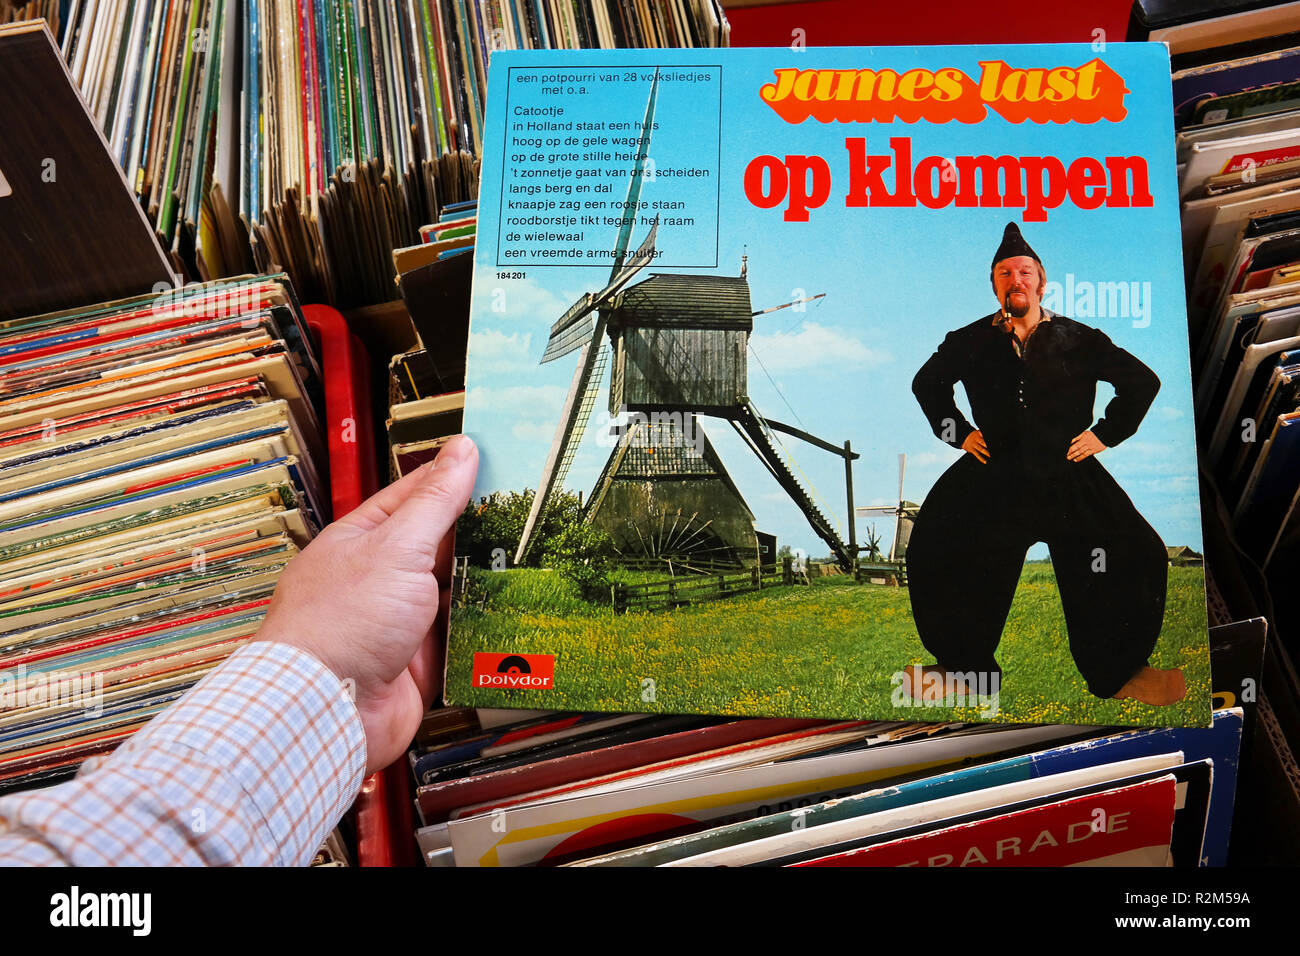 Album: James Last - op klompen Stock Photo - Alamy